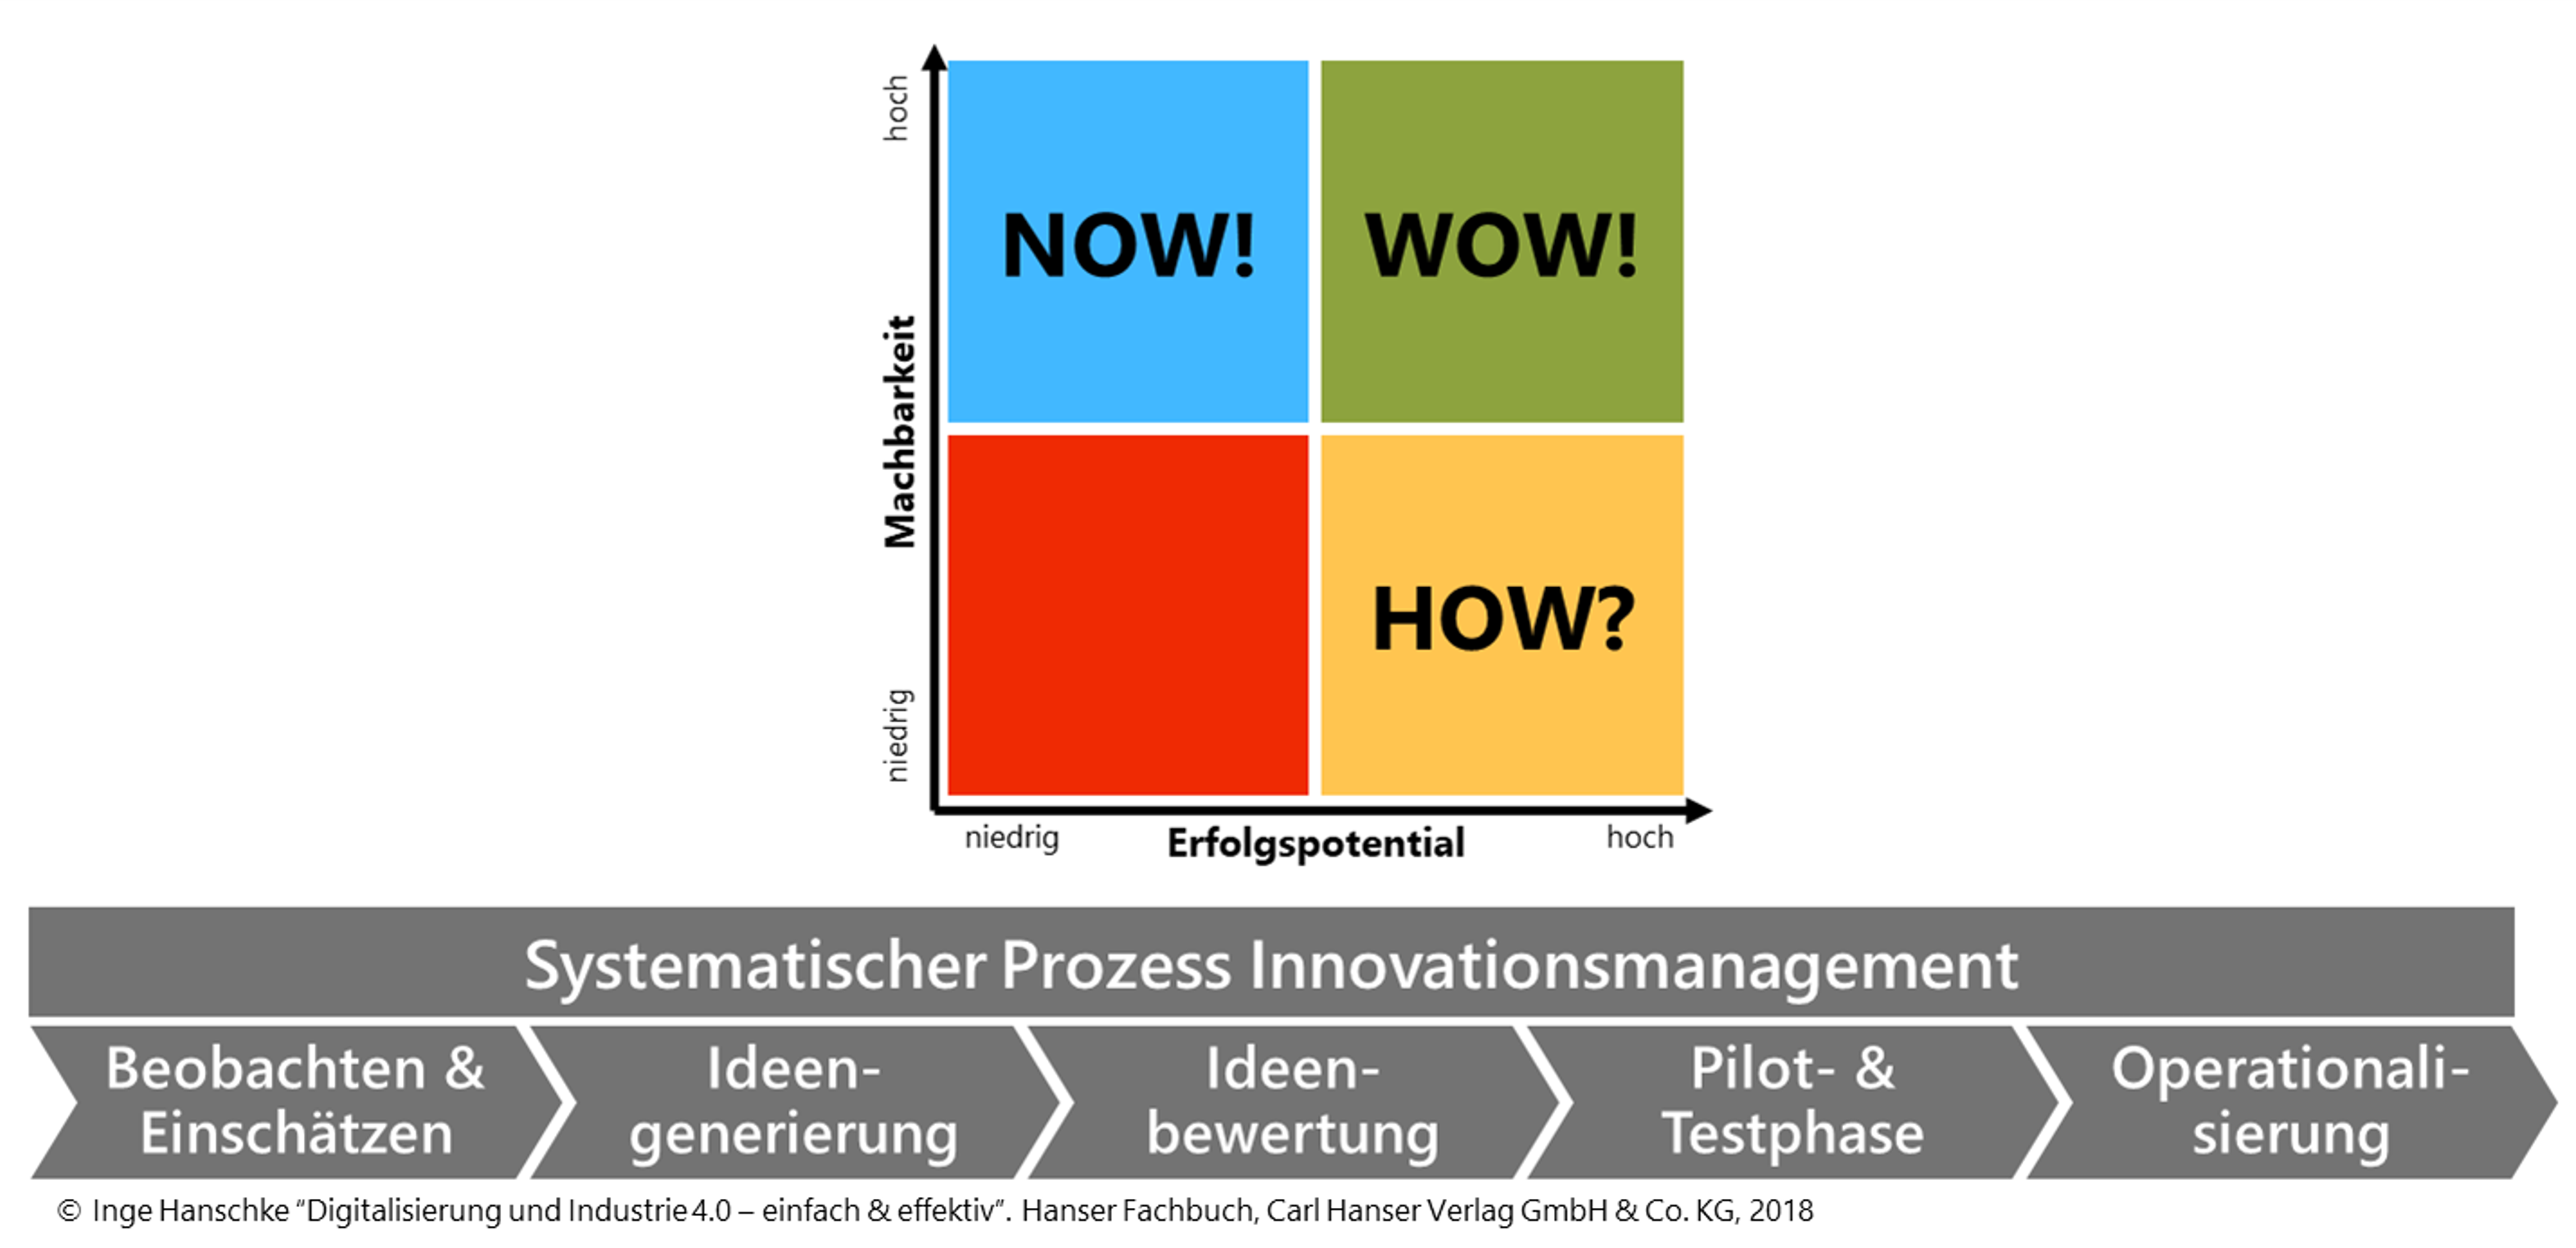 Innovation-Enabling: Experimentation and continuous learning as the key to the future © Inge Hanschke “Digitalisierung und Industrie 4.0 – einfach & effektiv”. Hanser Fachbuch, Carl Hanser Verlag GmbH & Co. KG, 2018